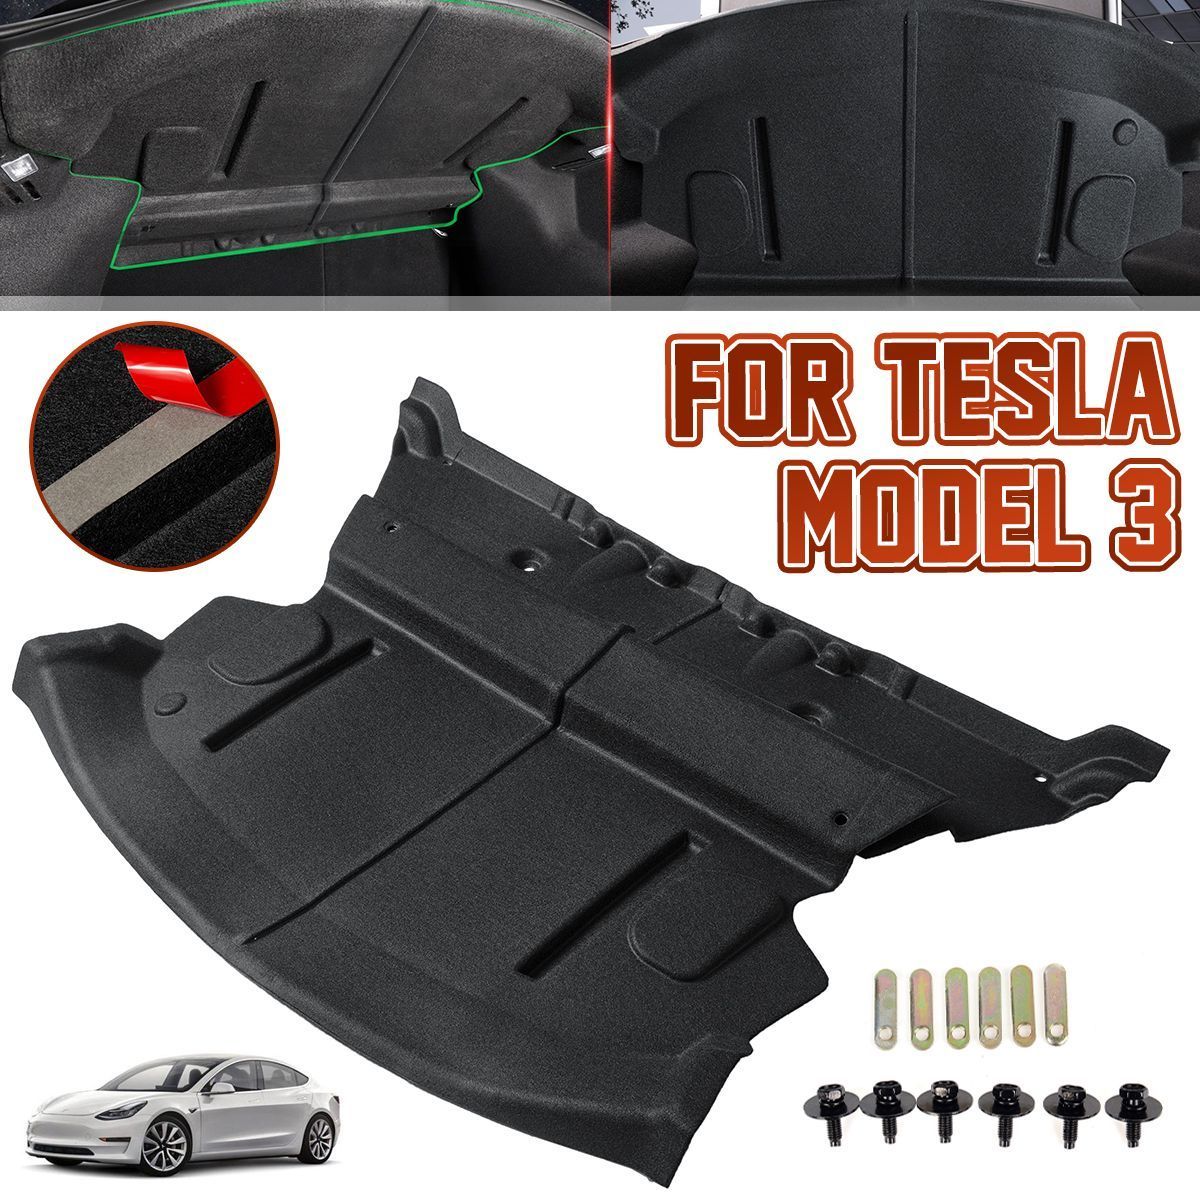 Car-Rear-Trunk-Soundproof-Cotton-Mat-cover-Tesla-Model-3-1635432